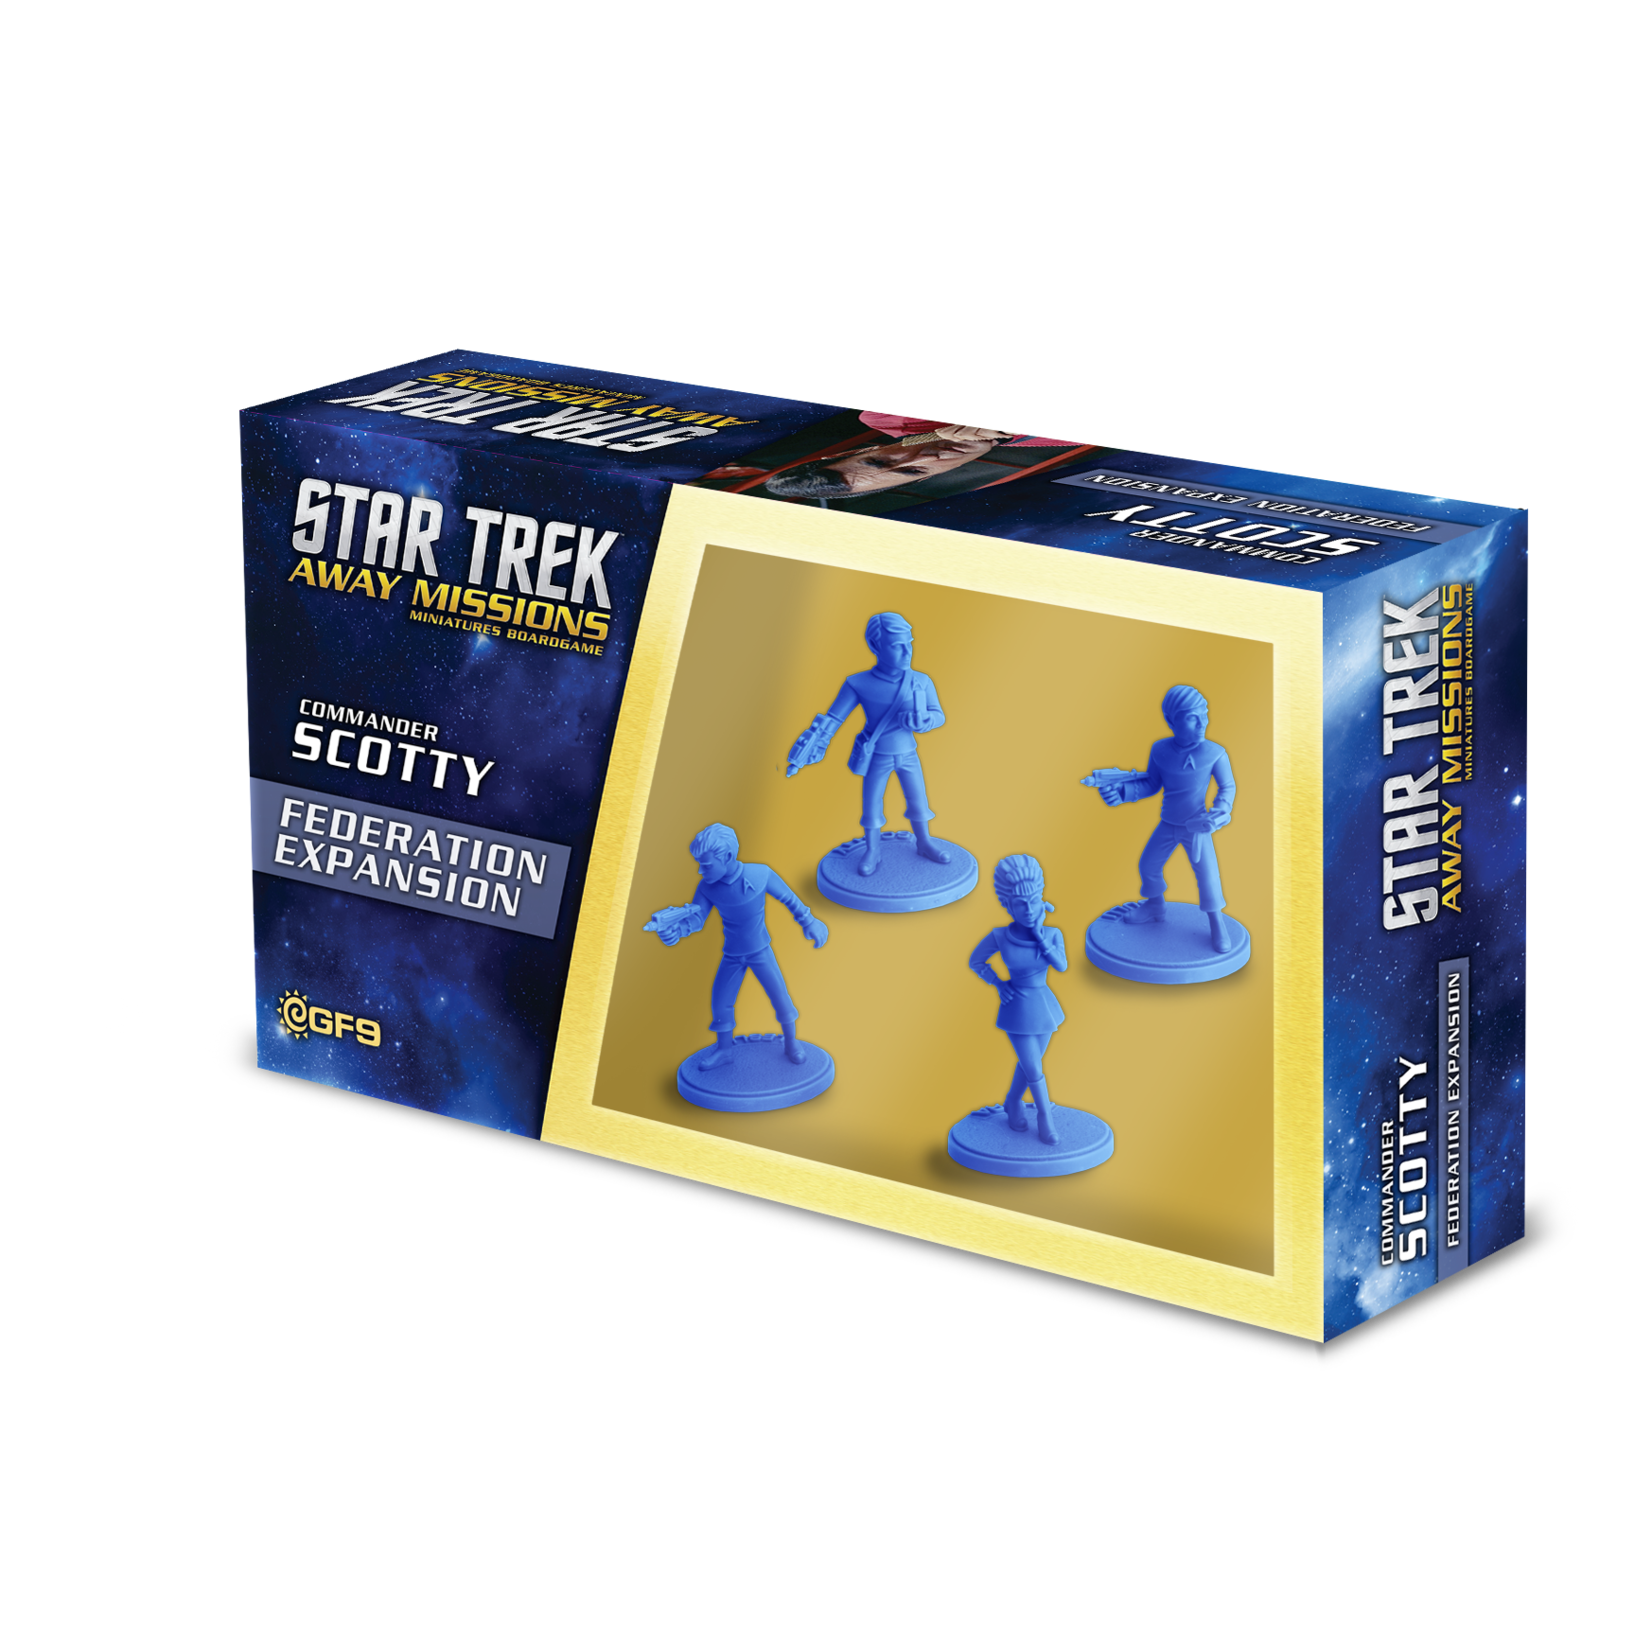 GaleForce Nine Star Trek Away Missions Commander Scotty Expansion